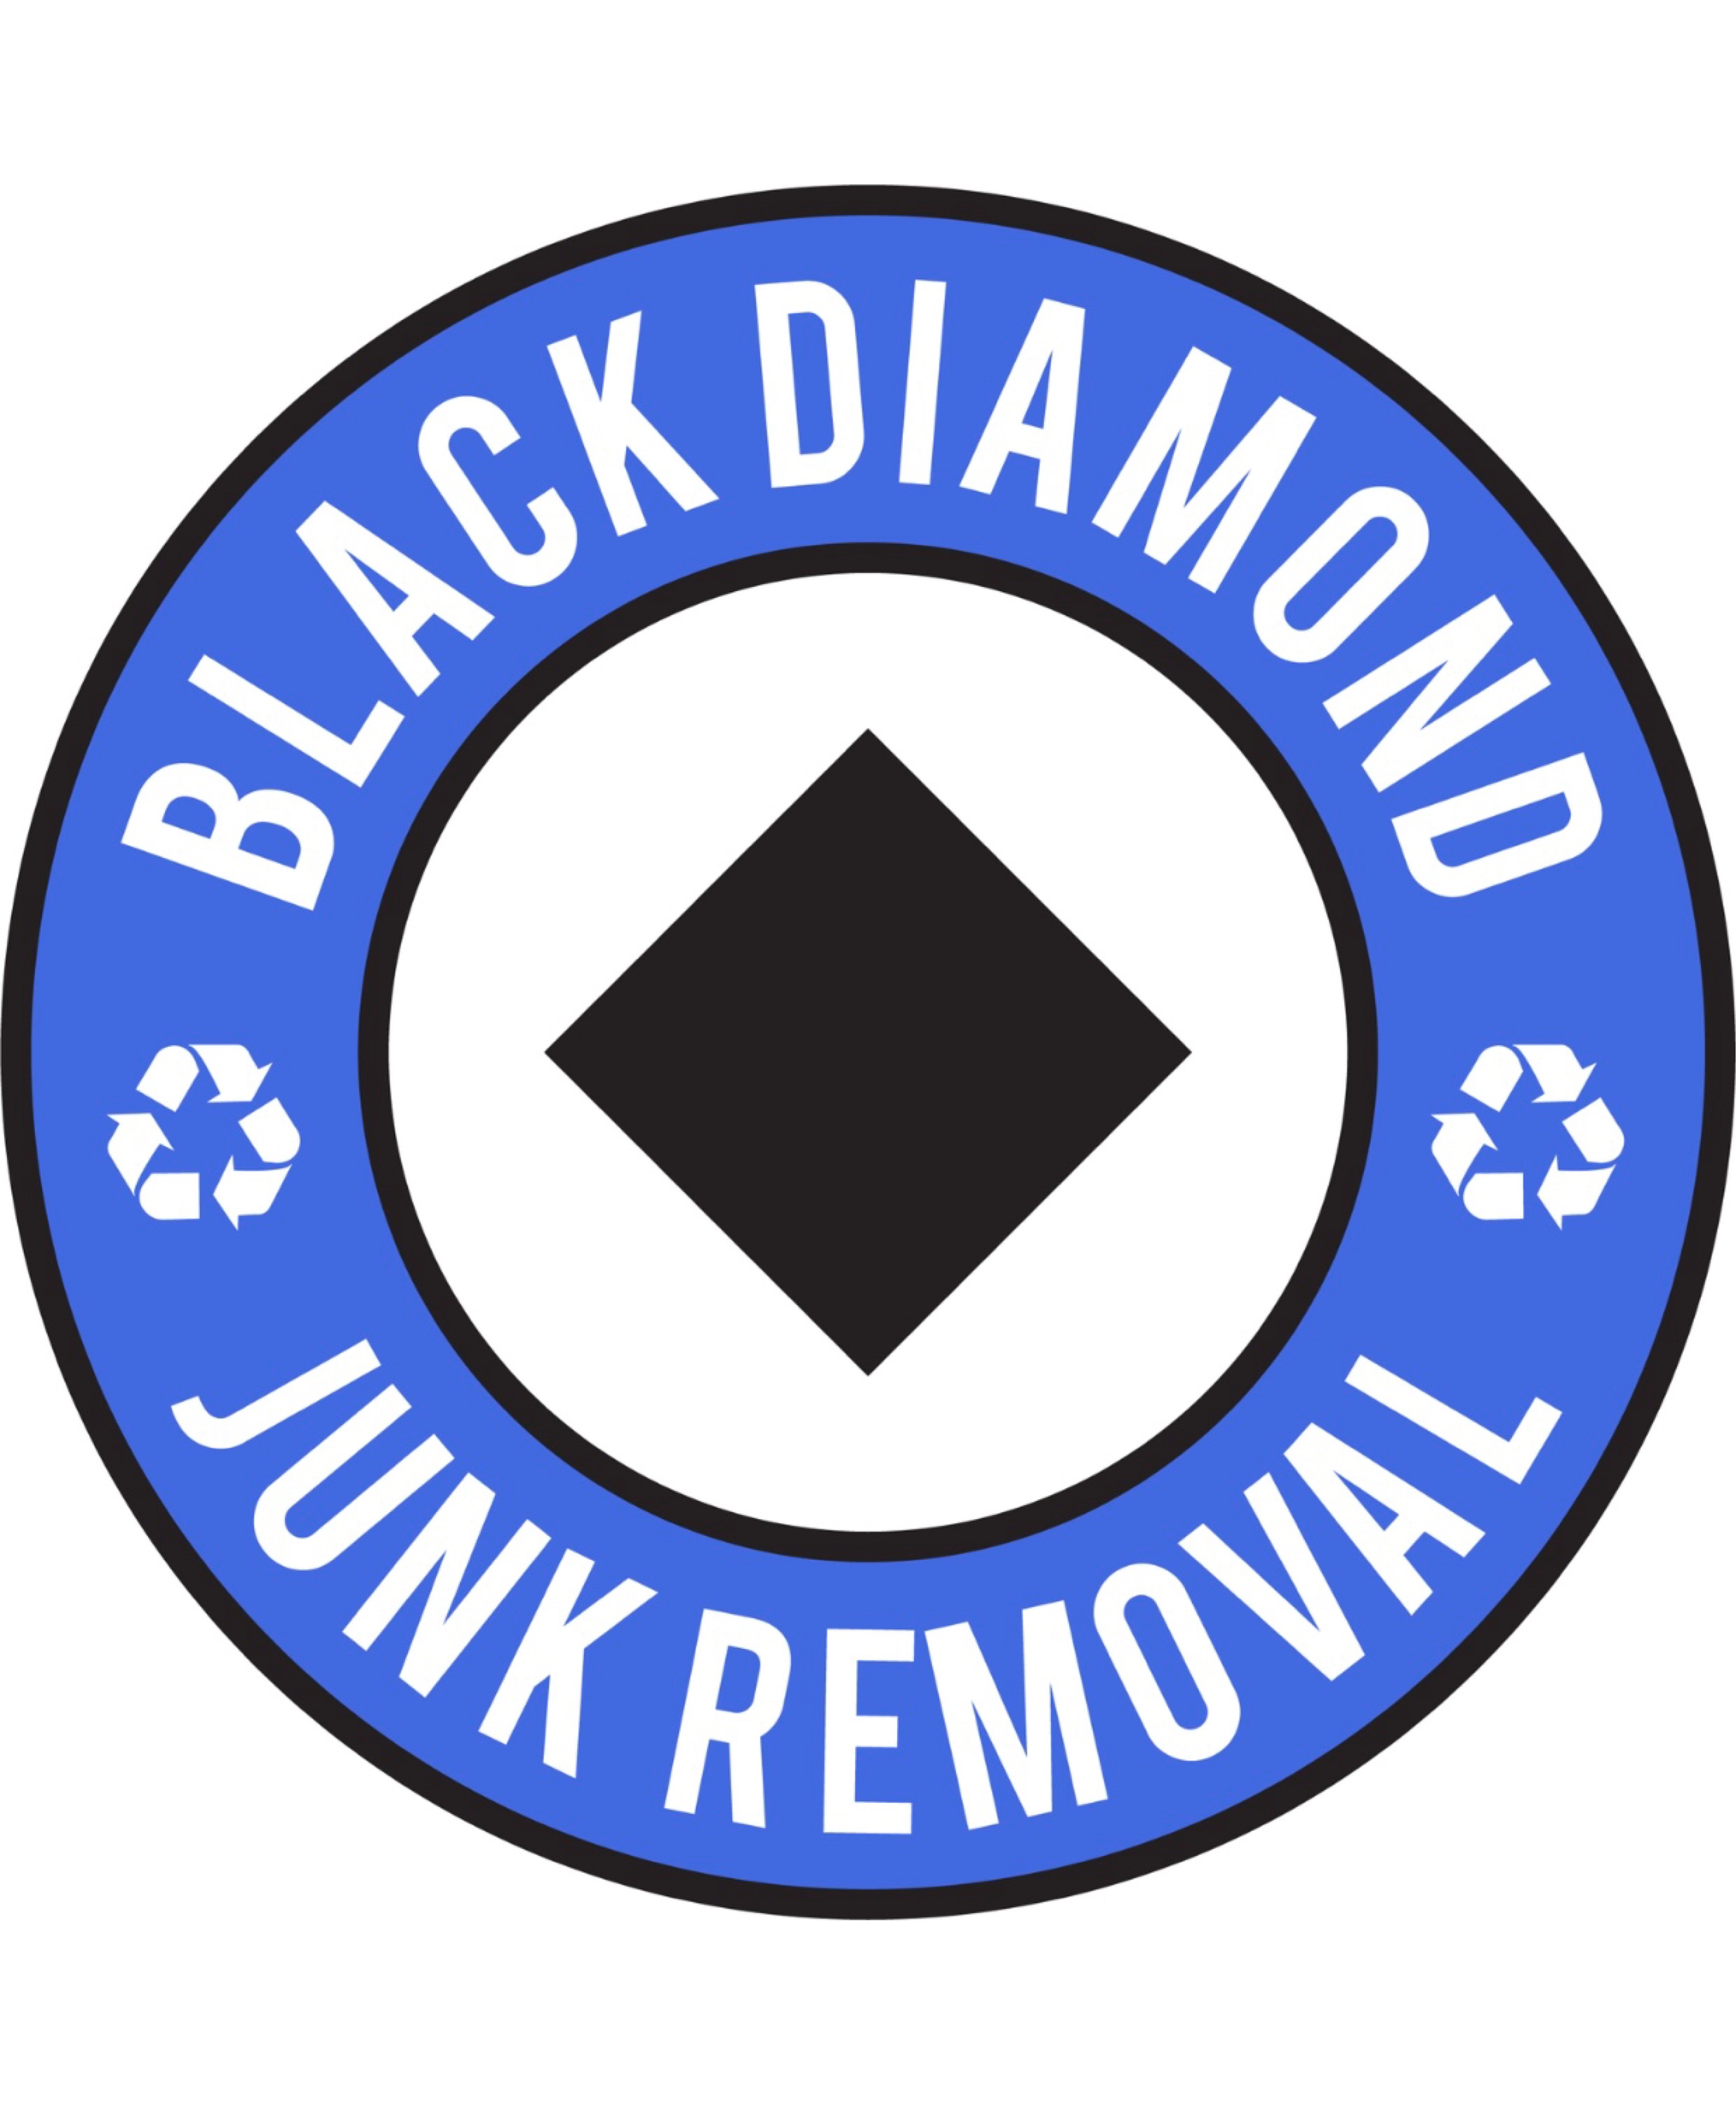 Black Diamond Junk Removal Logo